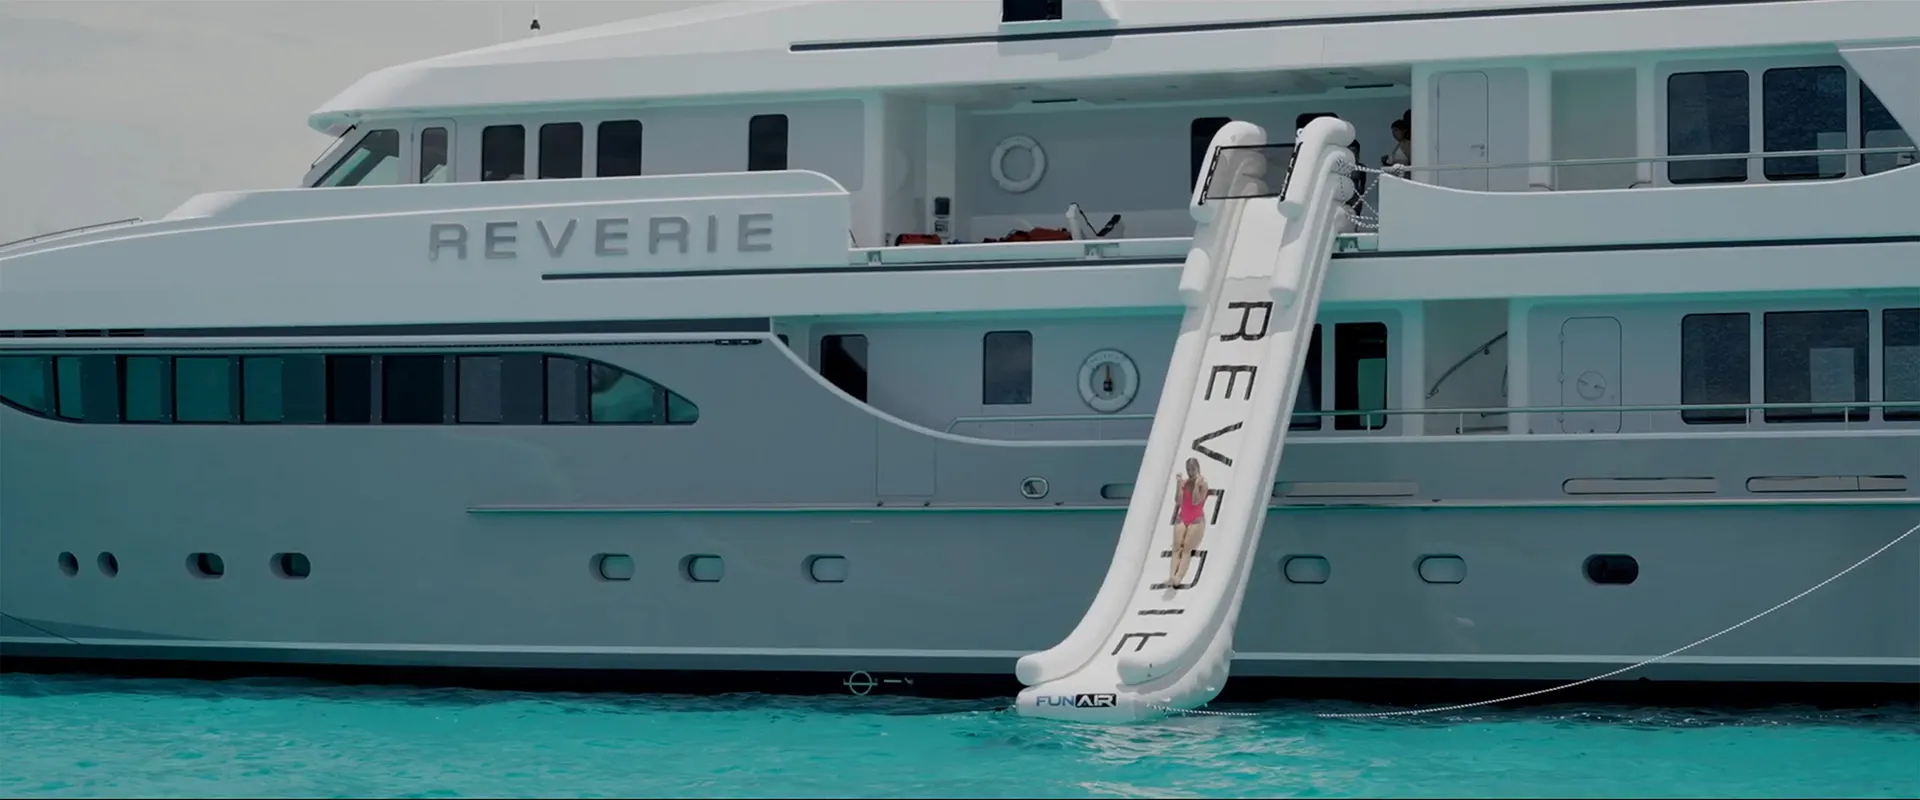 Yacht Slide on superyacht MY Reverie female charter guest on slide side